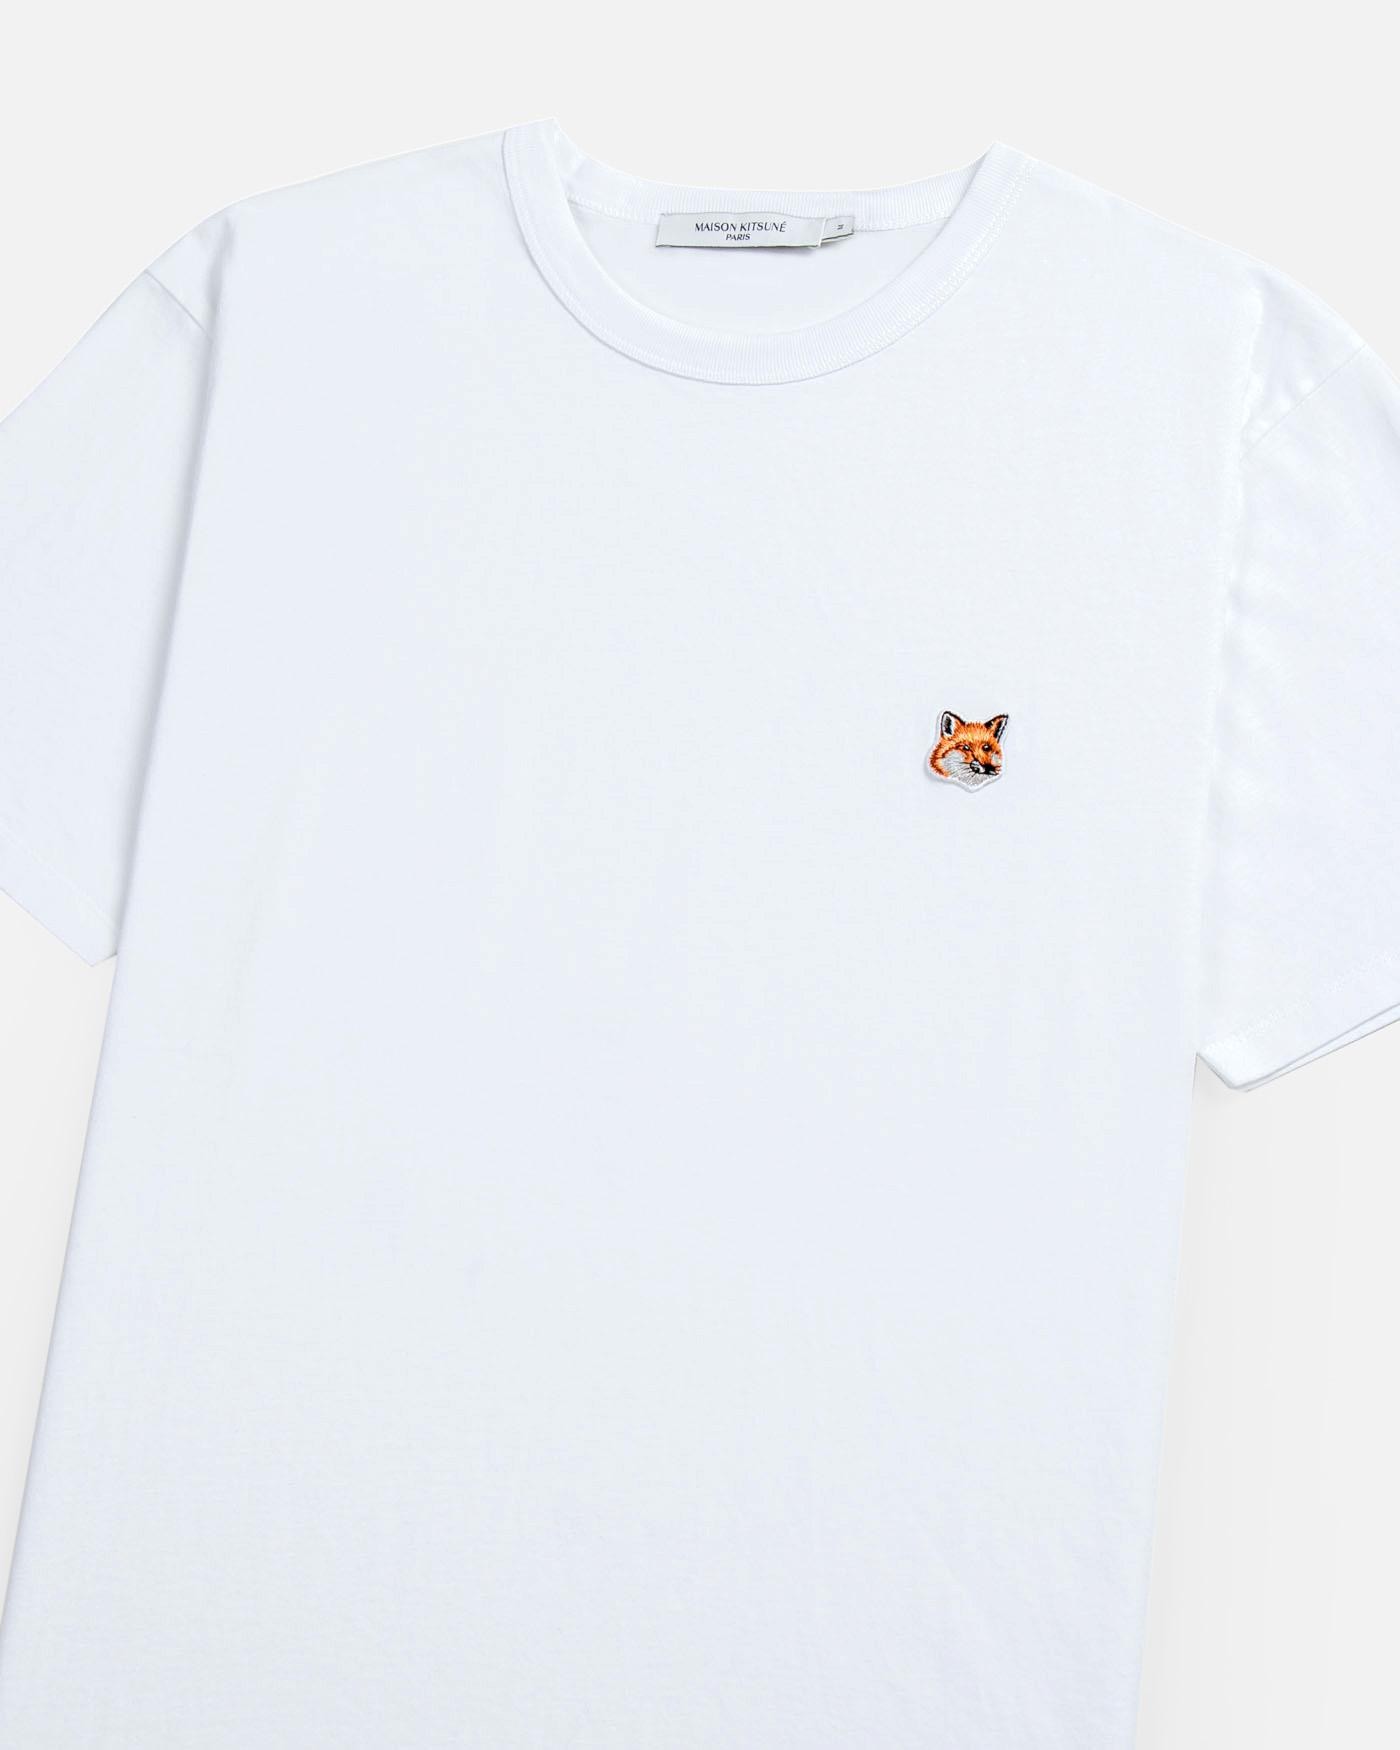 Camiseta Maison Kitsune Fox Head Patch 5